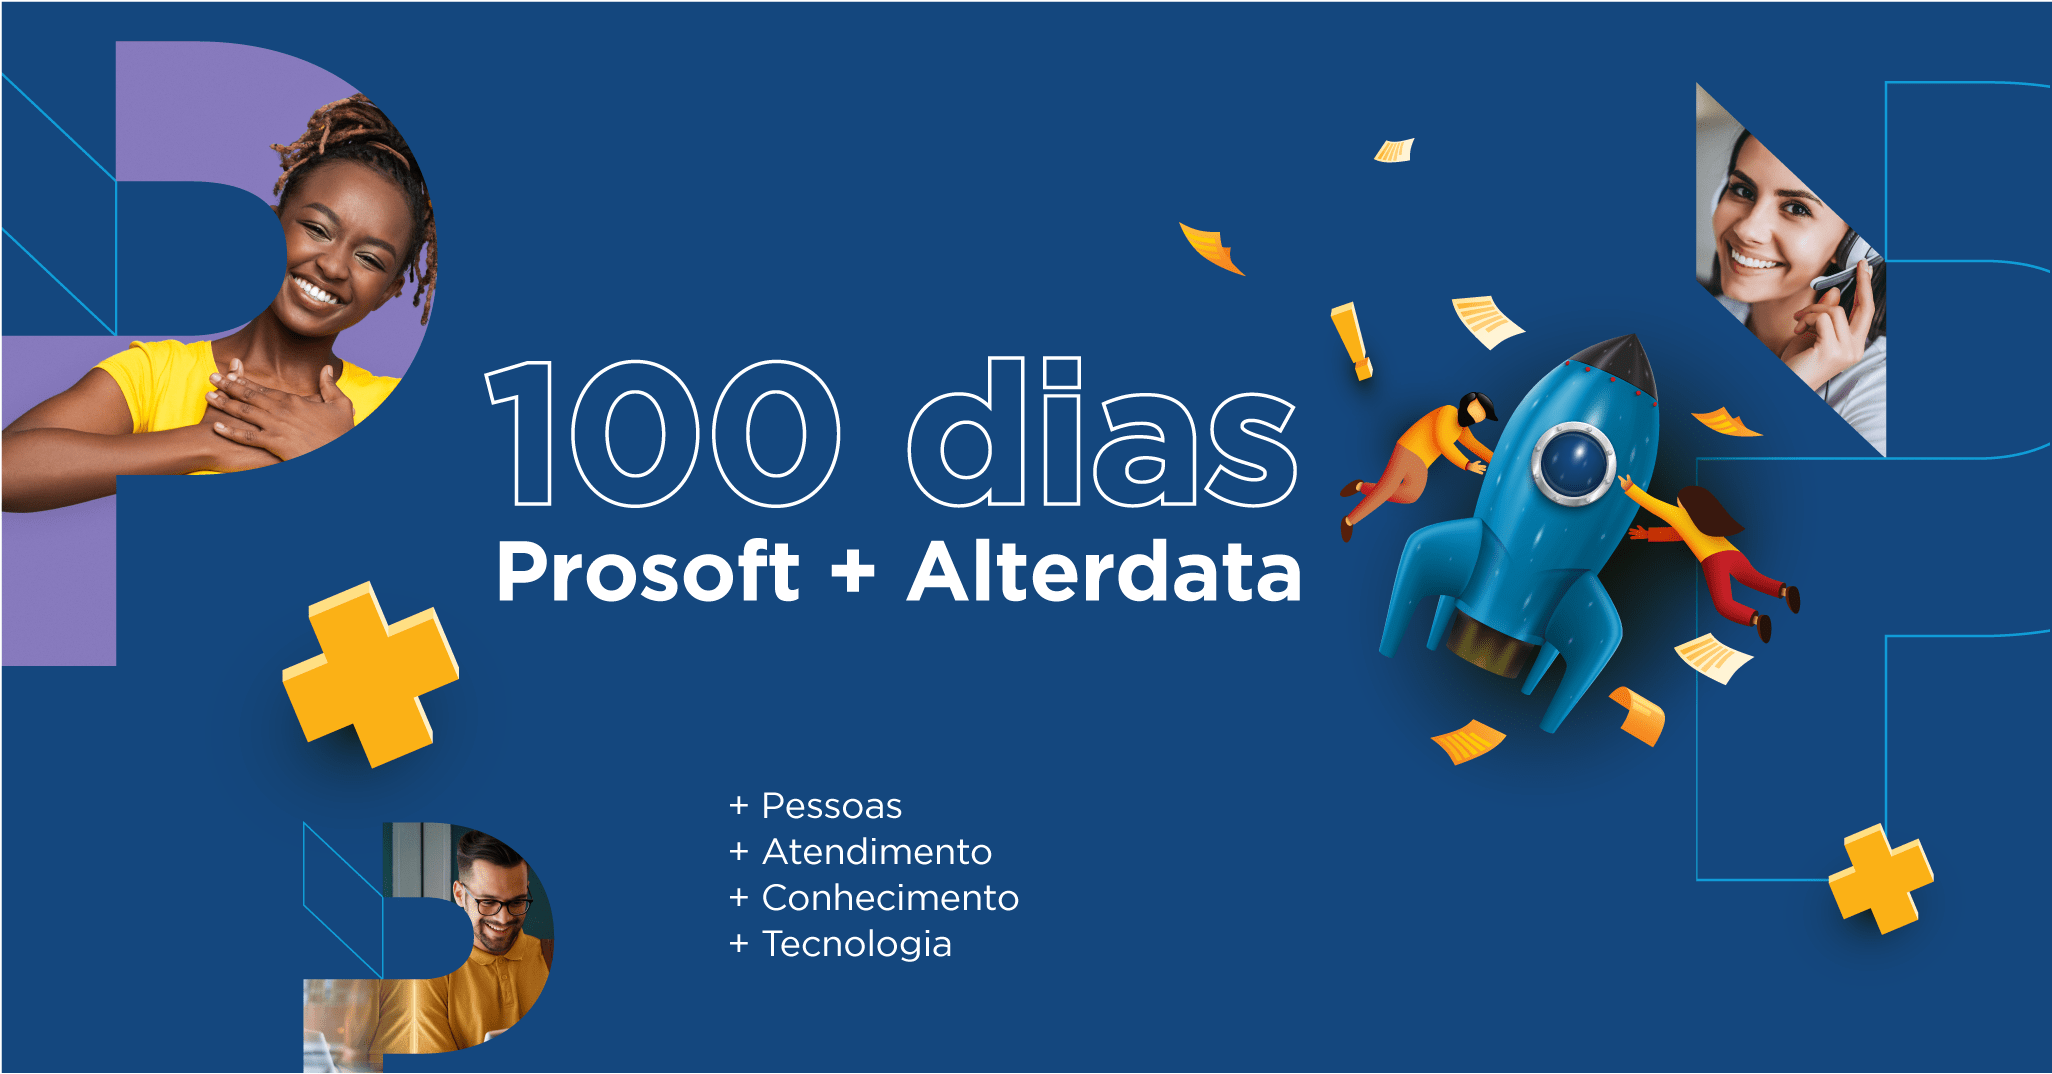 100 dias de Prosoft + Alterdata